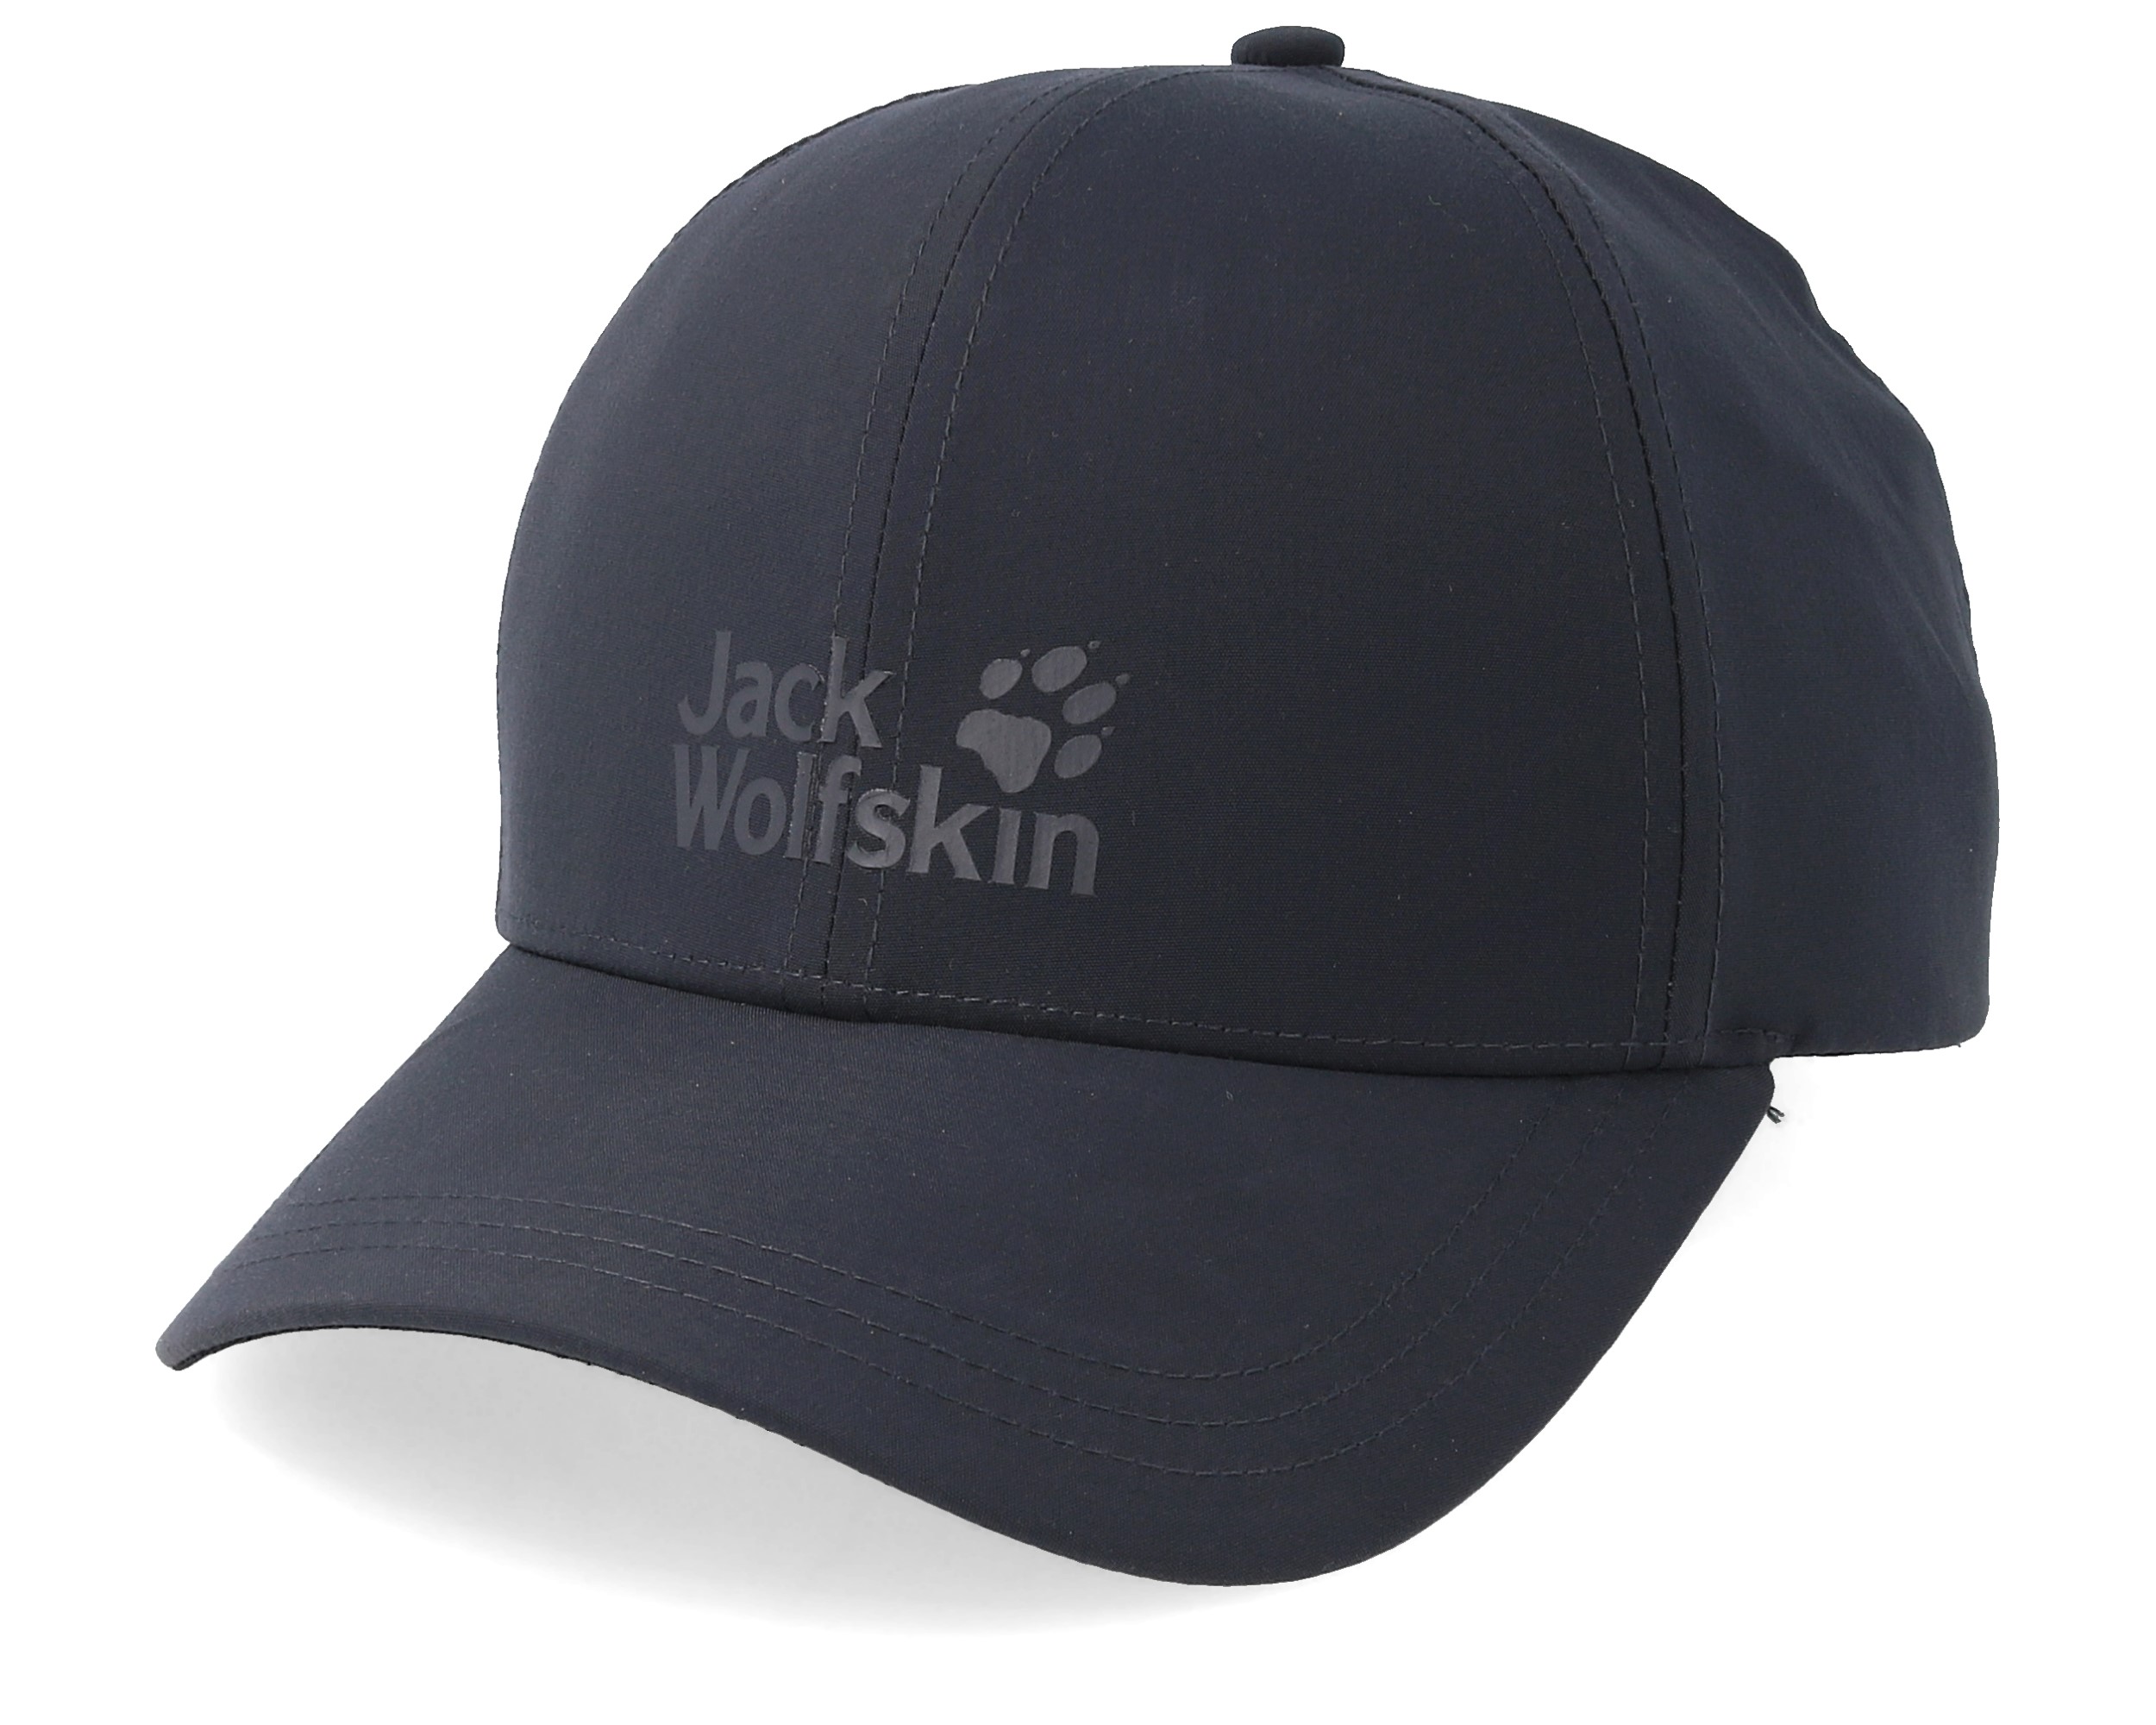 Summer Storm Phantom Adjustable - Jack cap Wolfskin